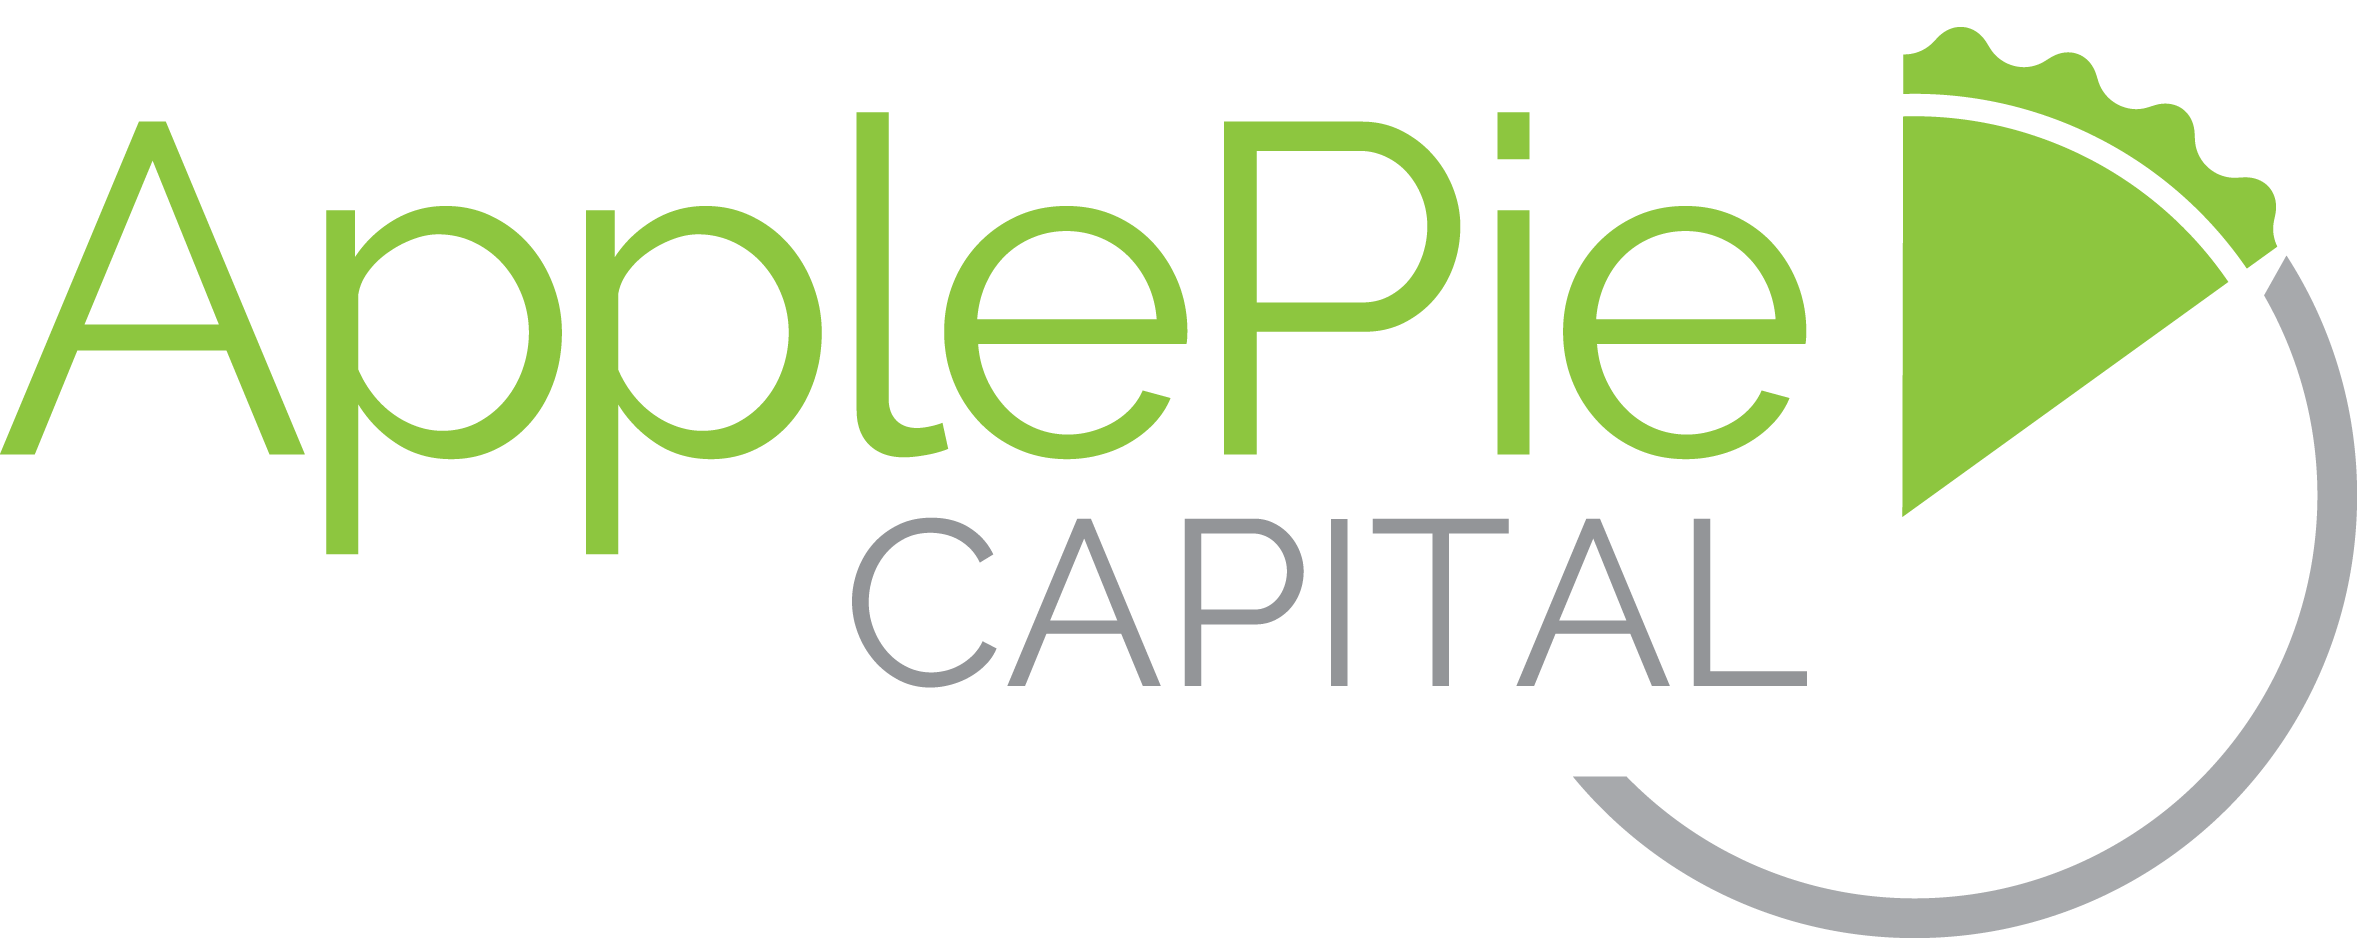 Apple Pie Capital